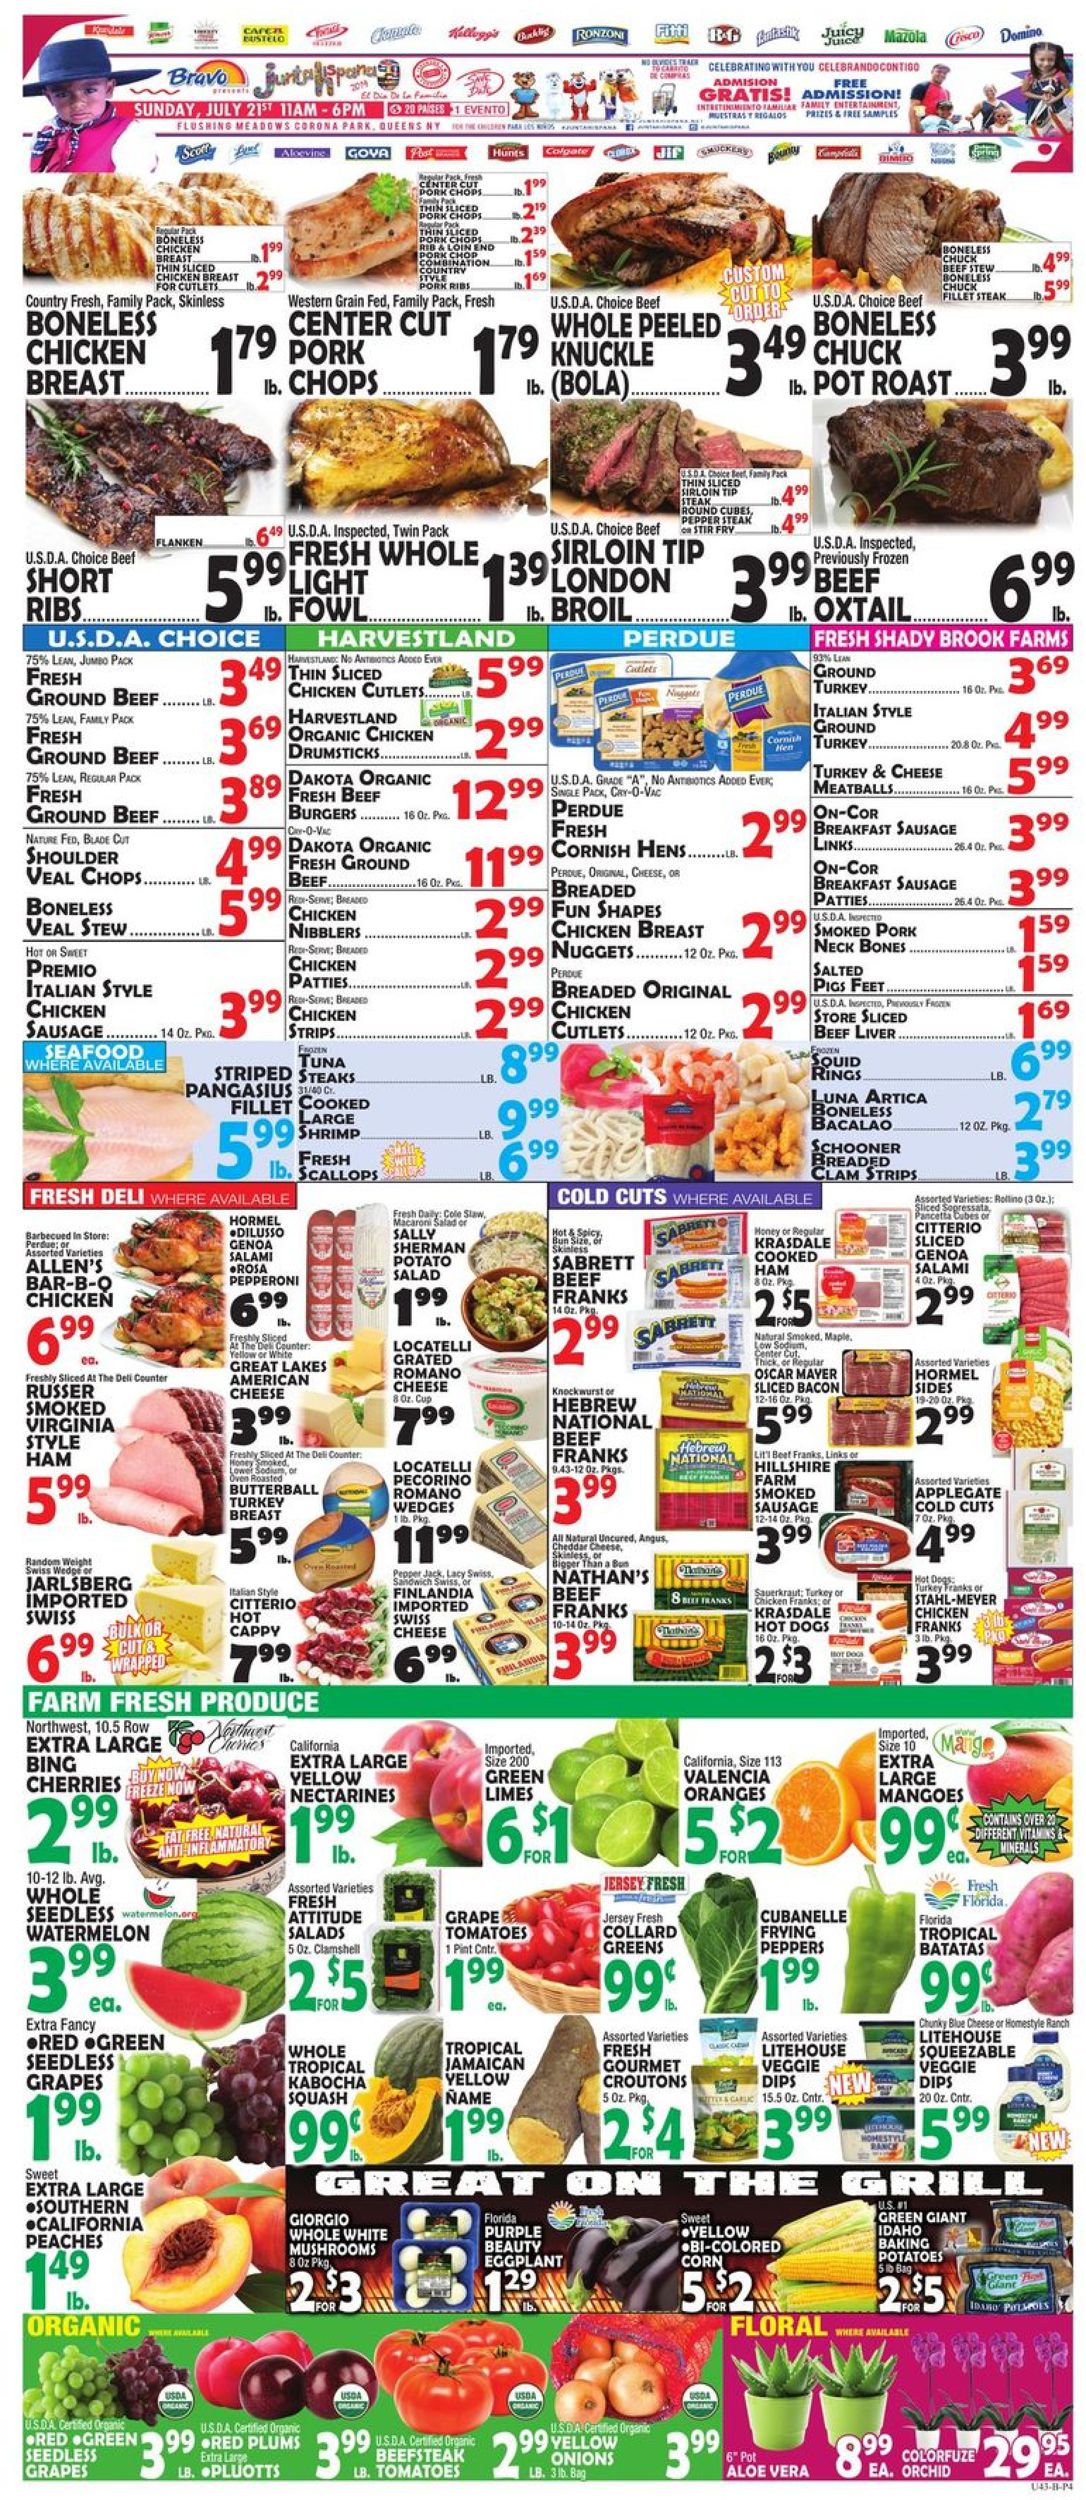 Catalogue Bravo Supermarkets from 07/05/2019